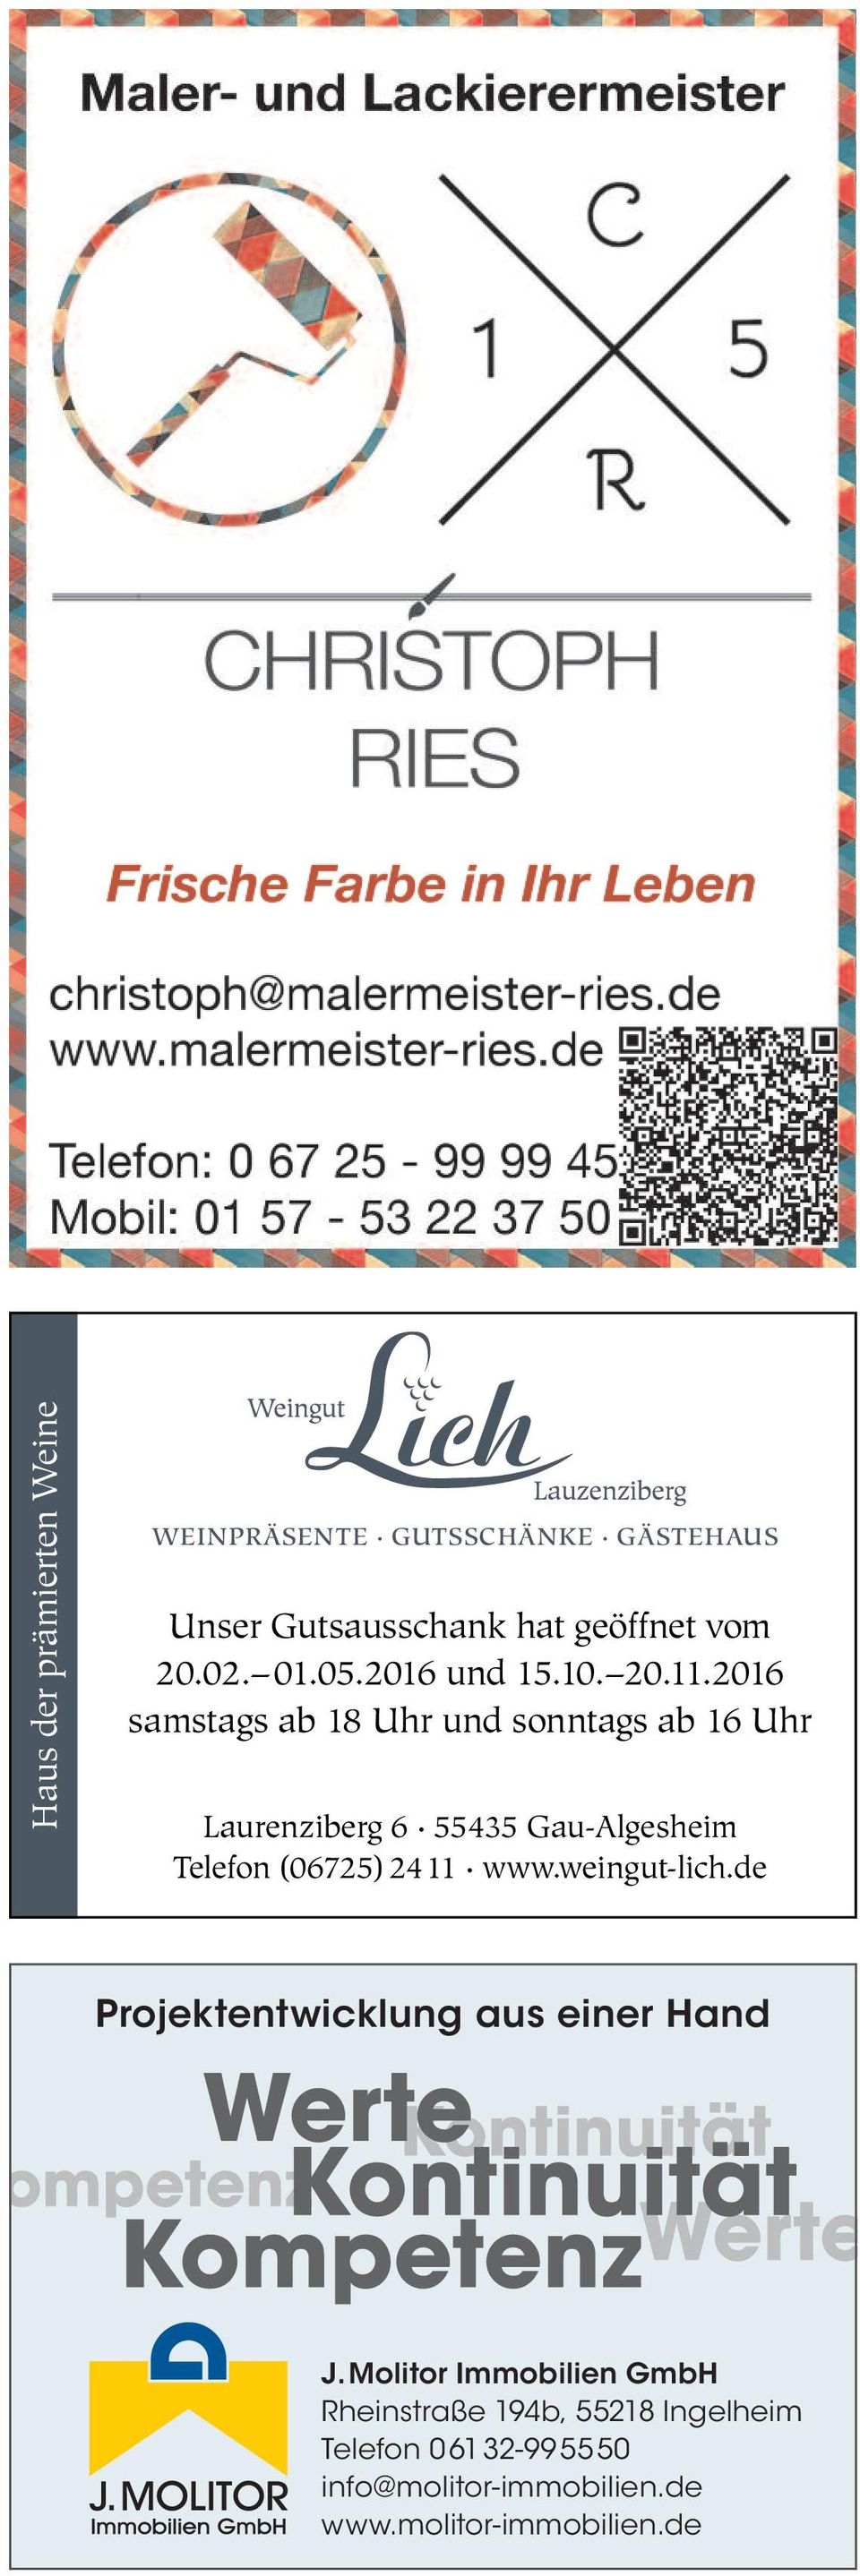 2016 samstags ab 18 Uhr und sonntags ab 16 Uhr Laurenziberg 6 55435 Gau-Algesheim Telefon (06725) 2411 www.